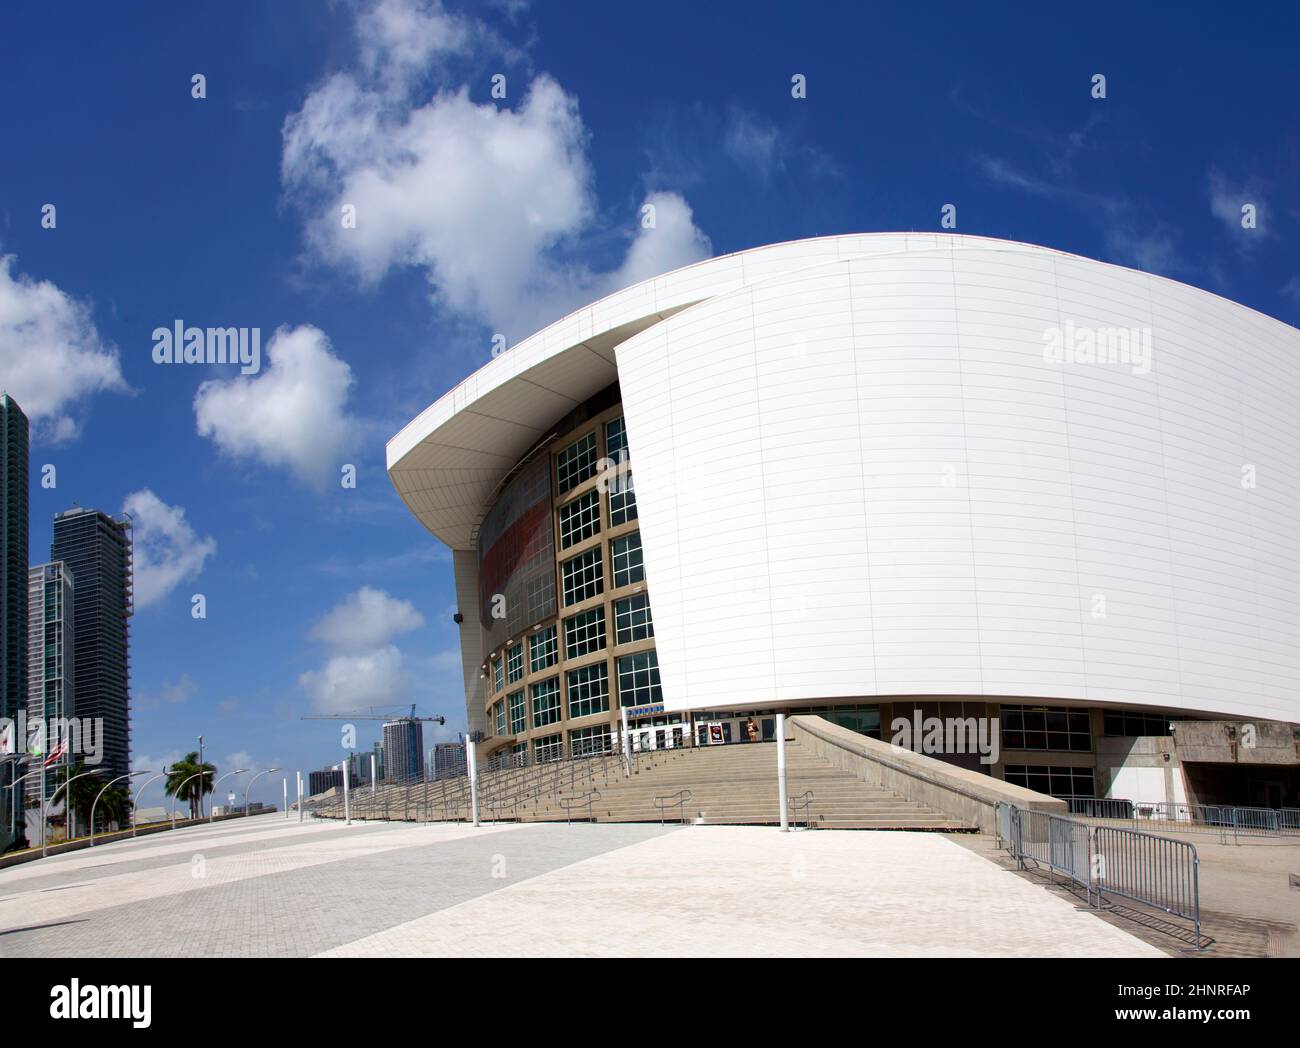 American Airlines Arena. Stade de l'équipe de basket-ball Miami Heat. Banque D'Images